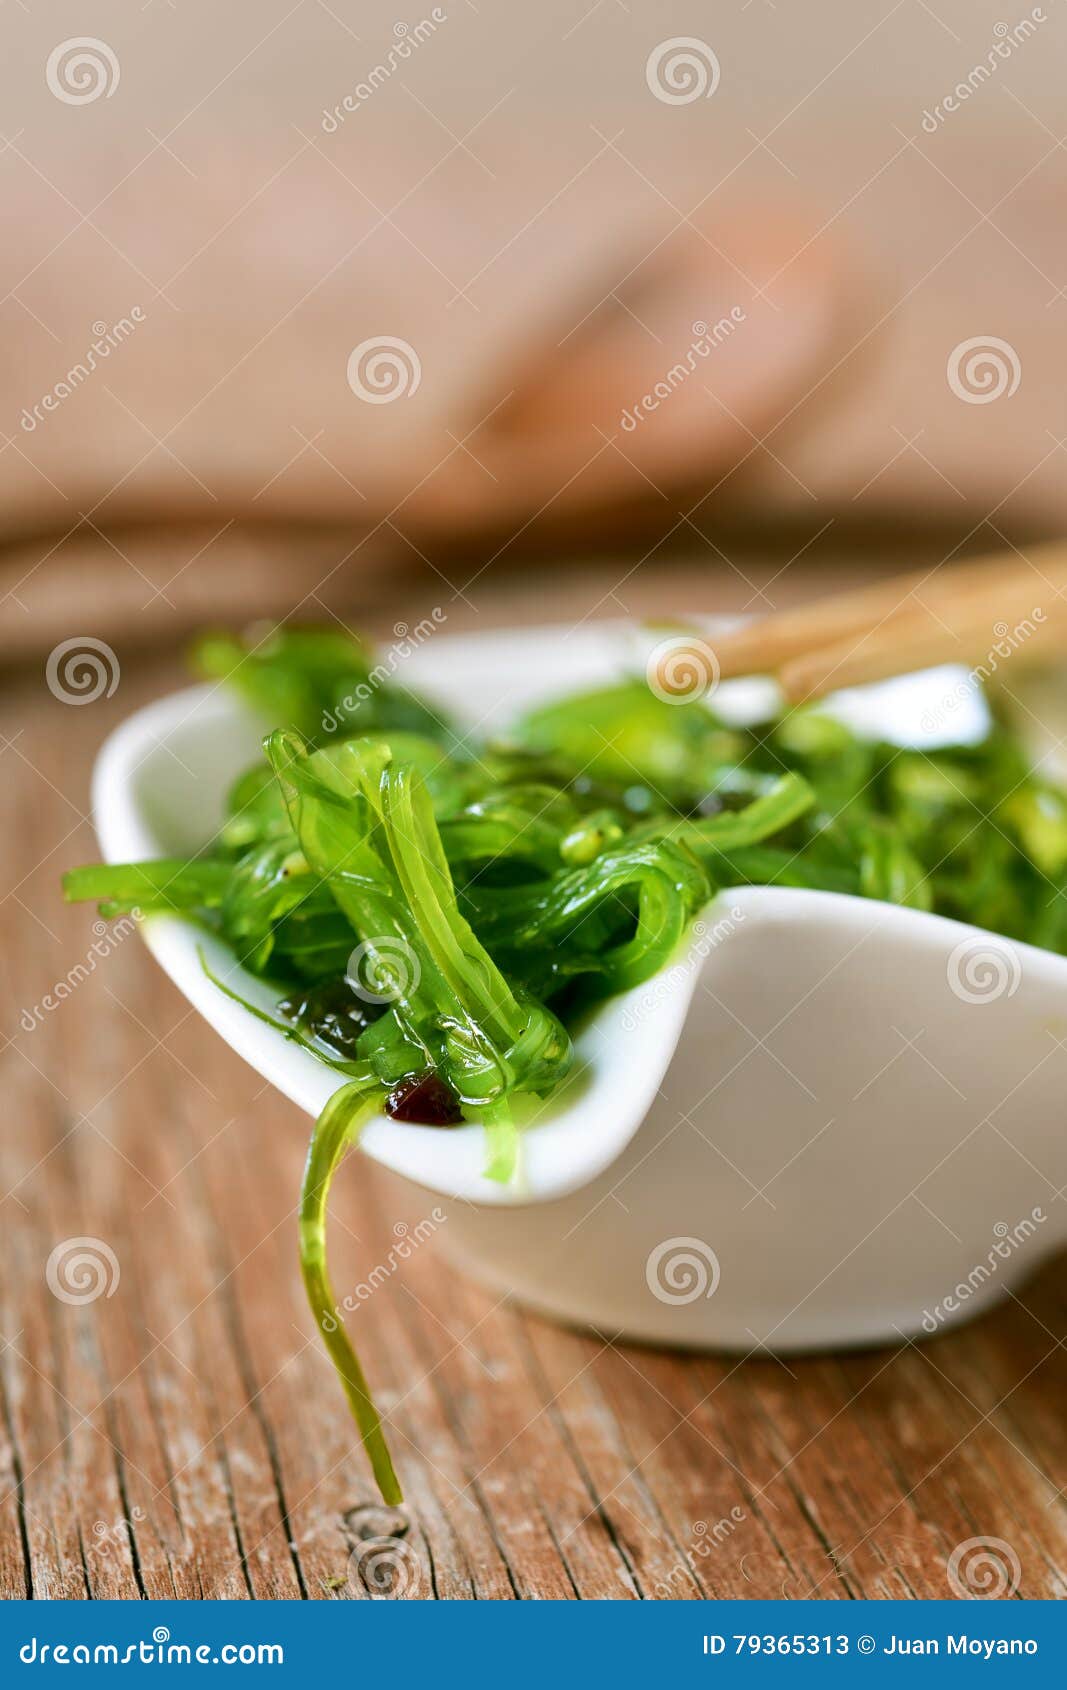 goma wakame or seaweed salad